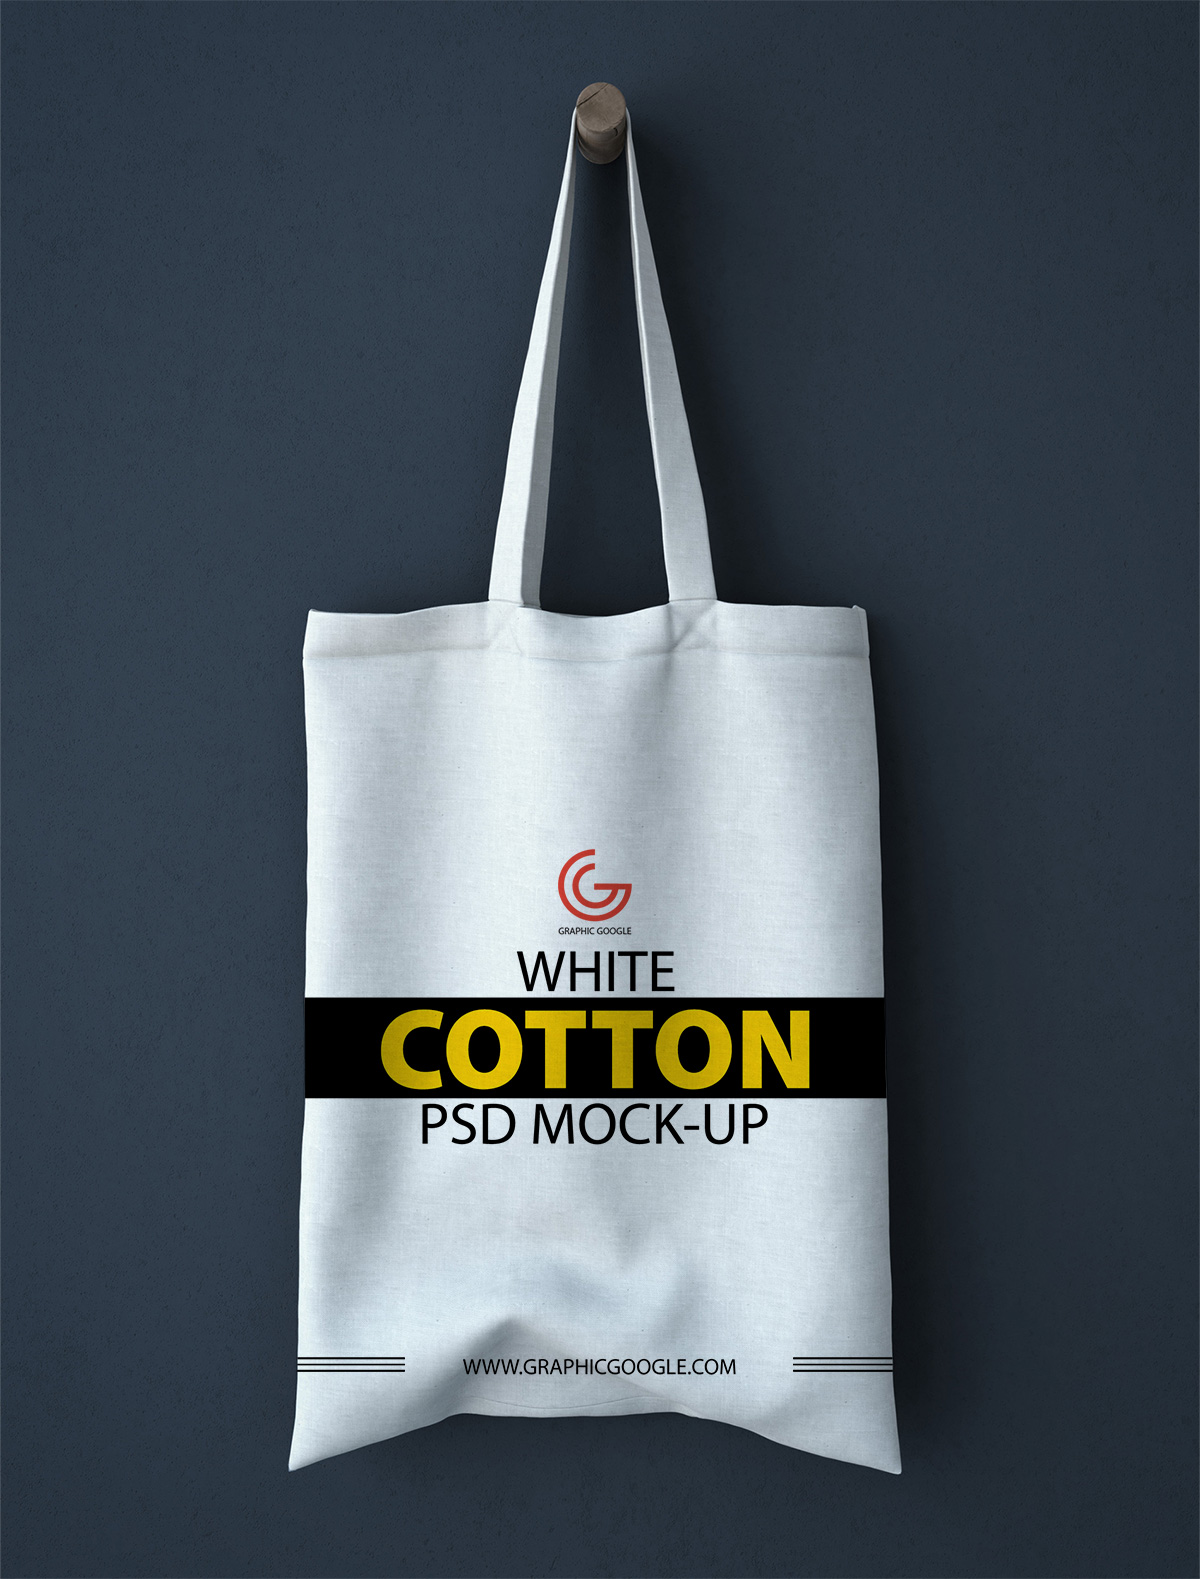 white-cotton-bag-psd-mock-up-3